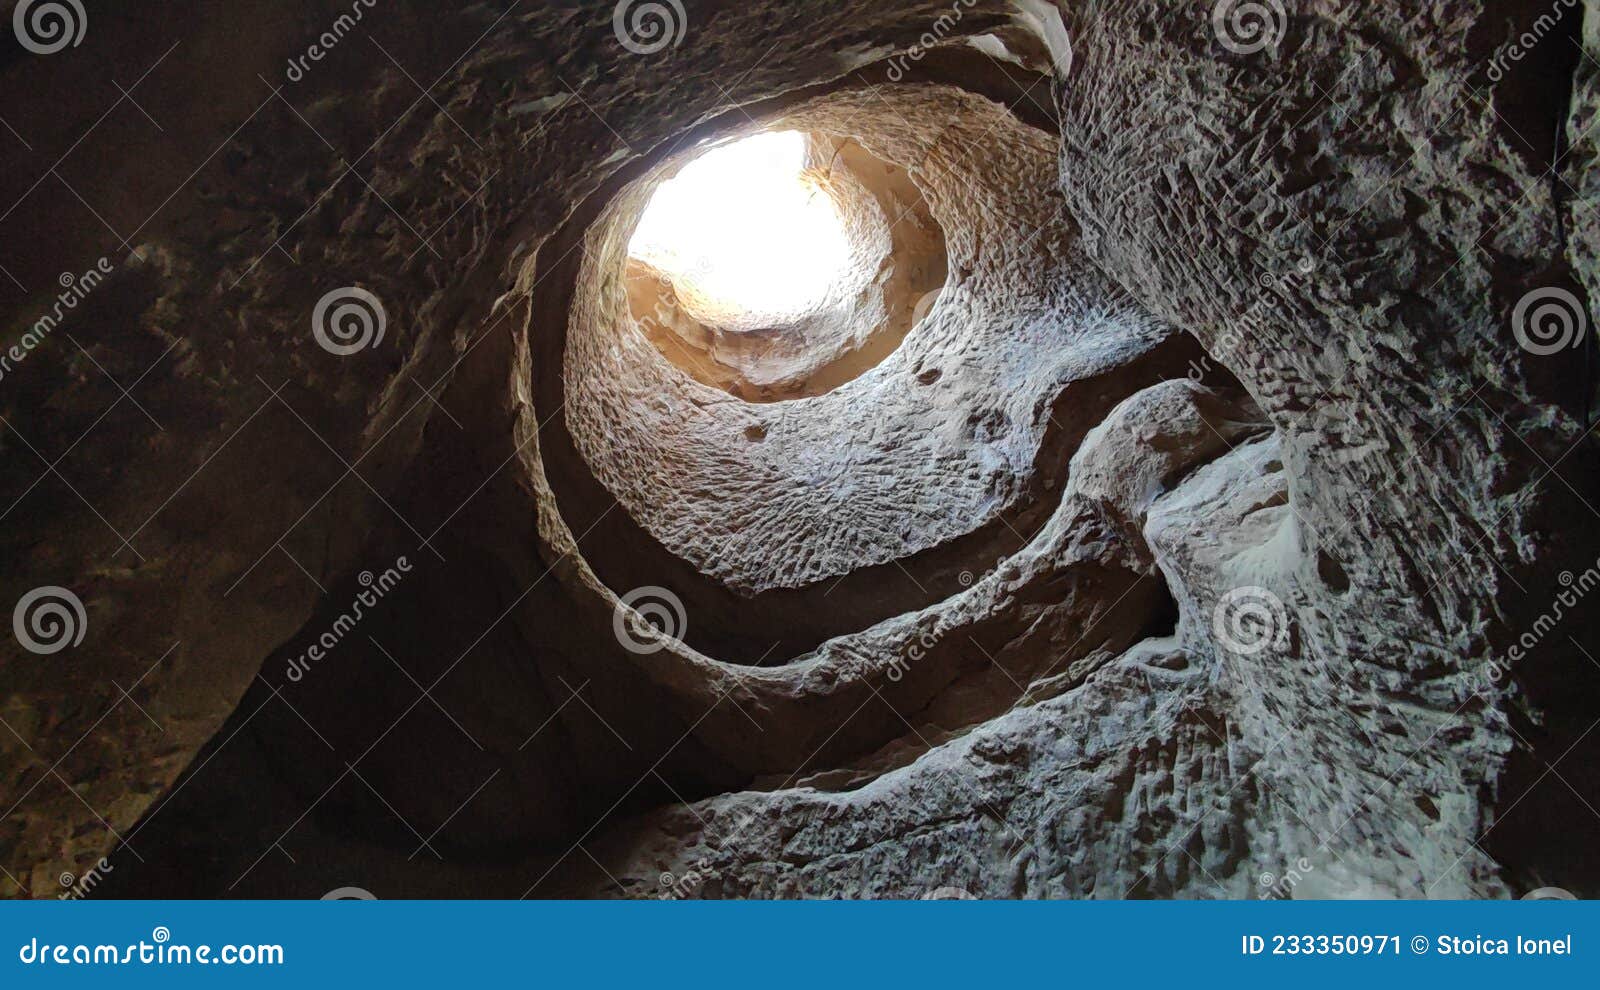 sinca veche cave monastery romania